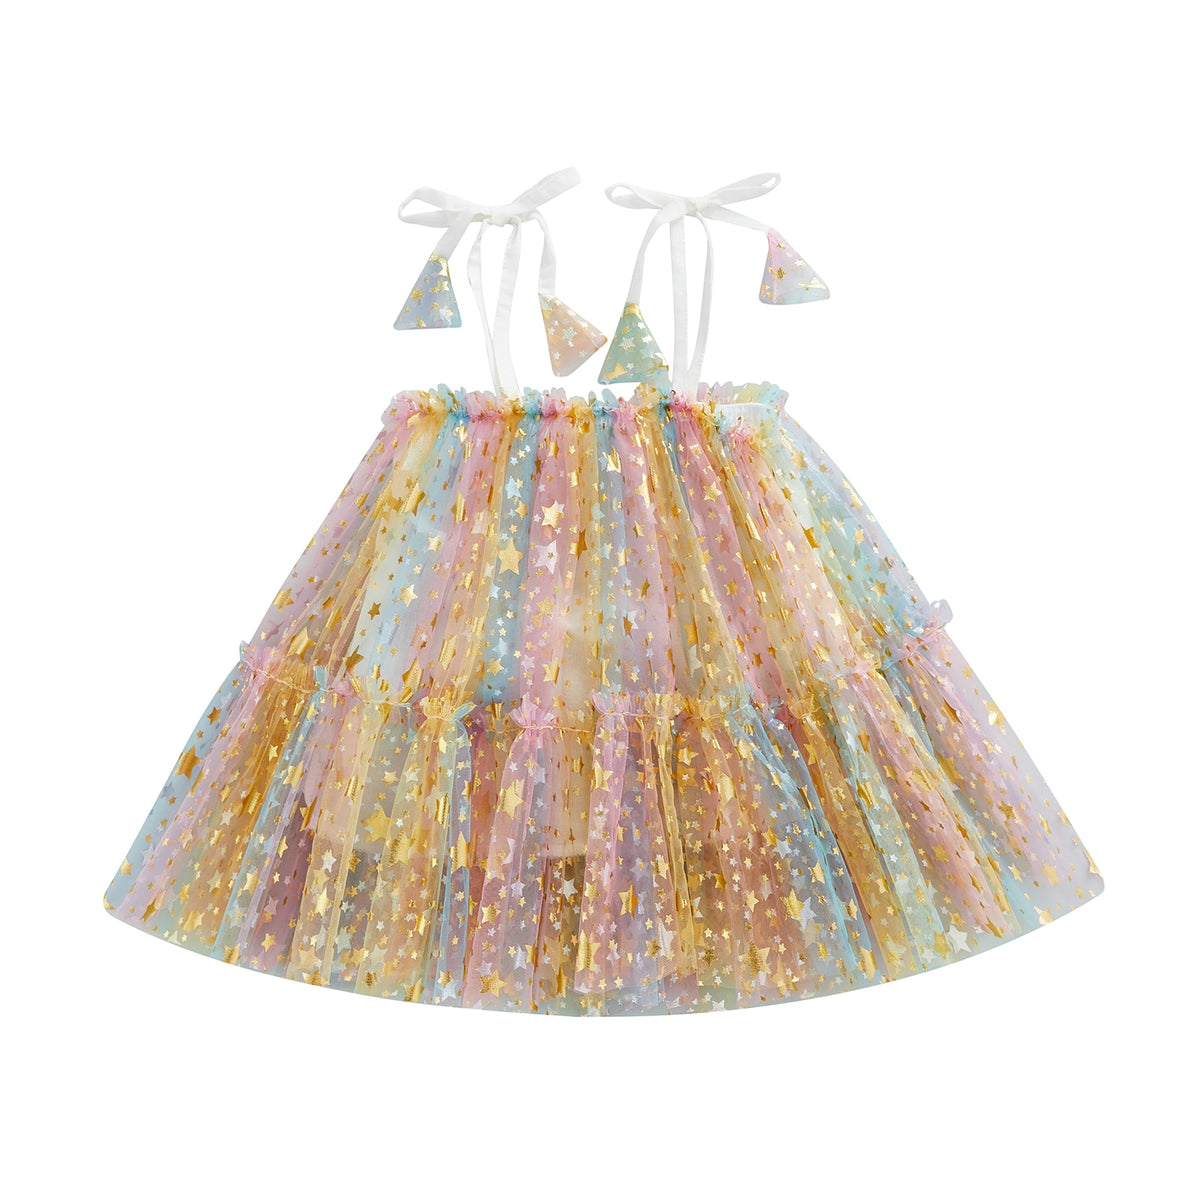 Girls' Sparkly Rainbow Tulle Dress